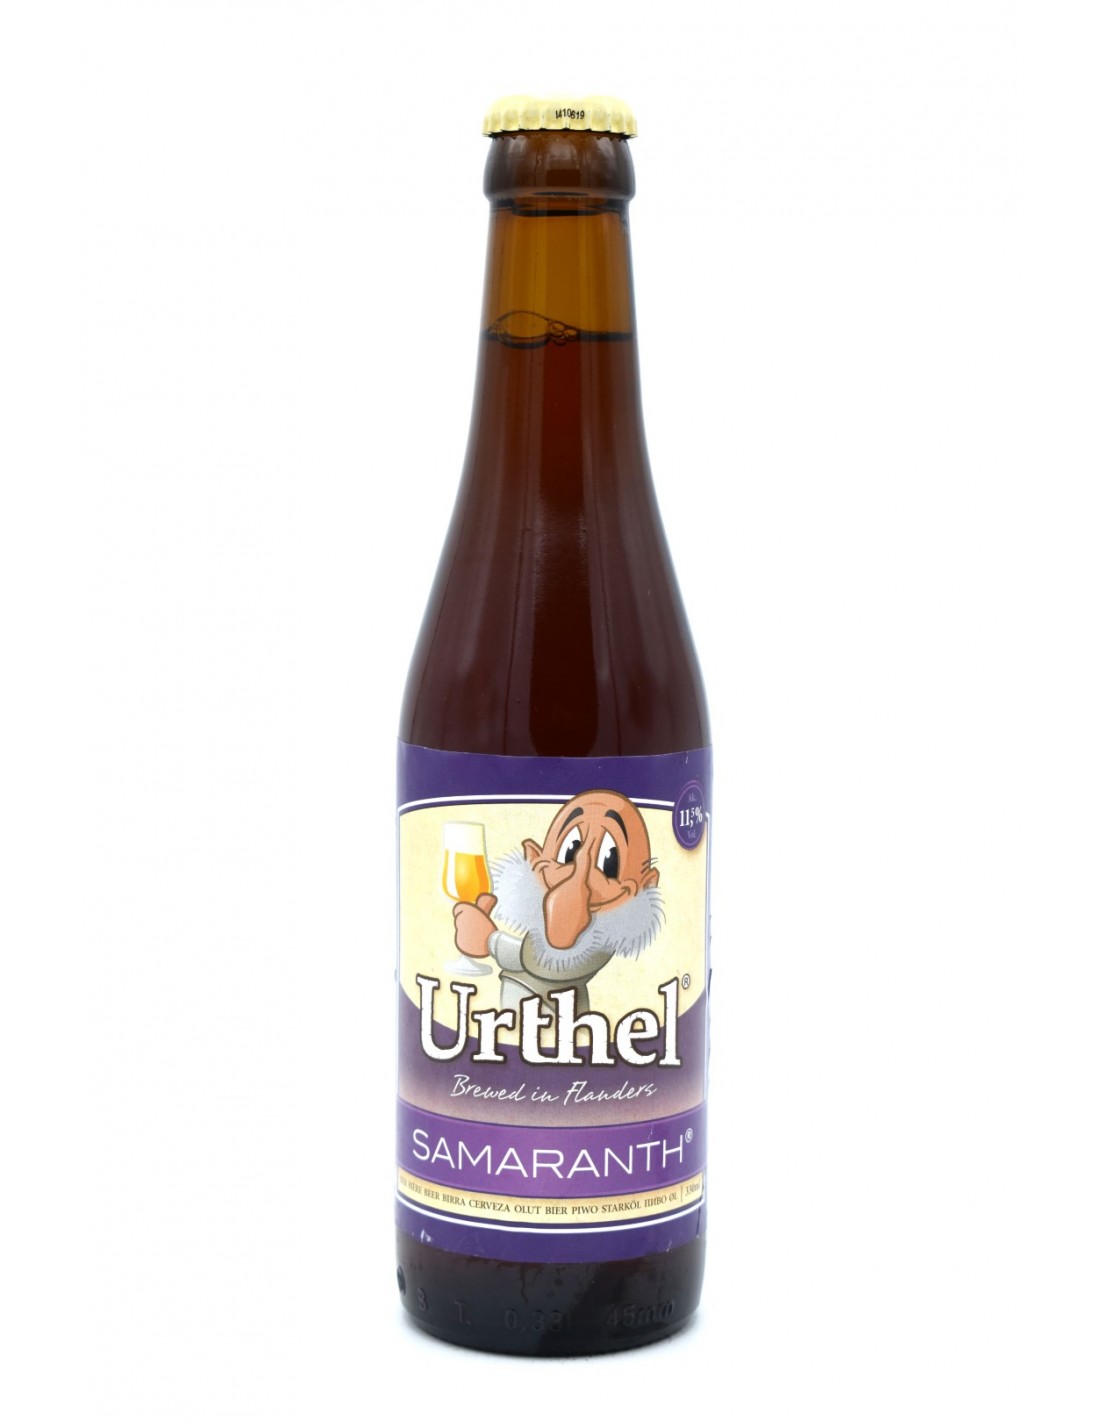 Bere neagra Urthel Samaranth, 11.5% alc., 0.33L, sticla, Belgia